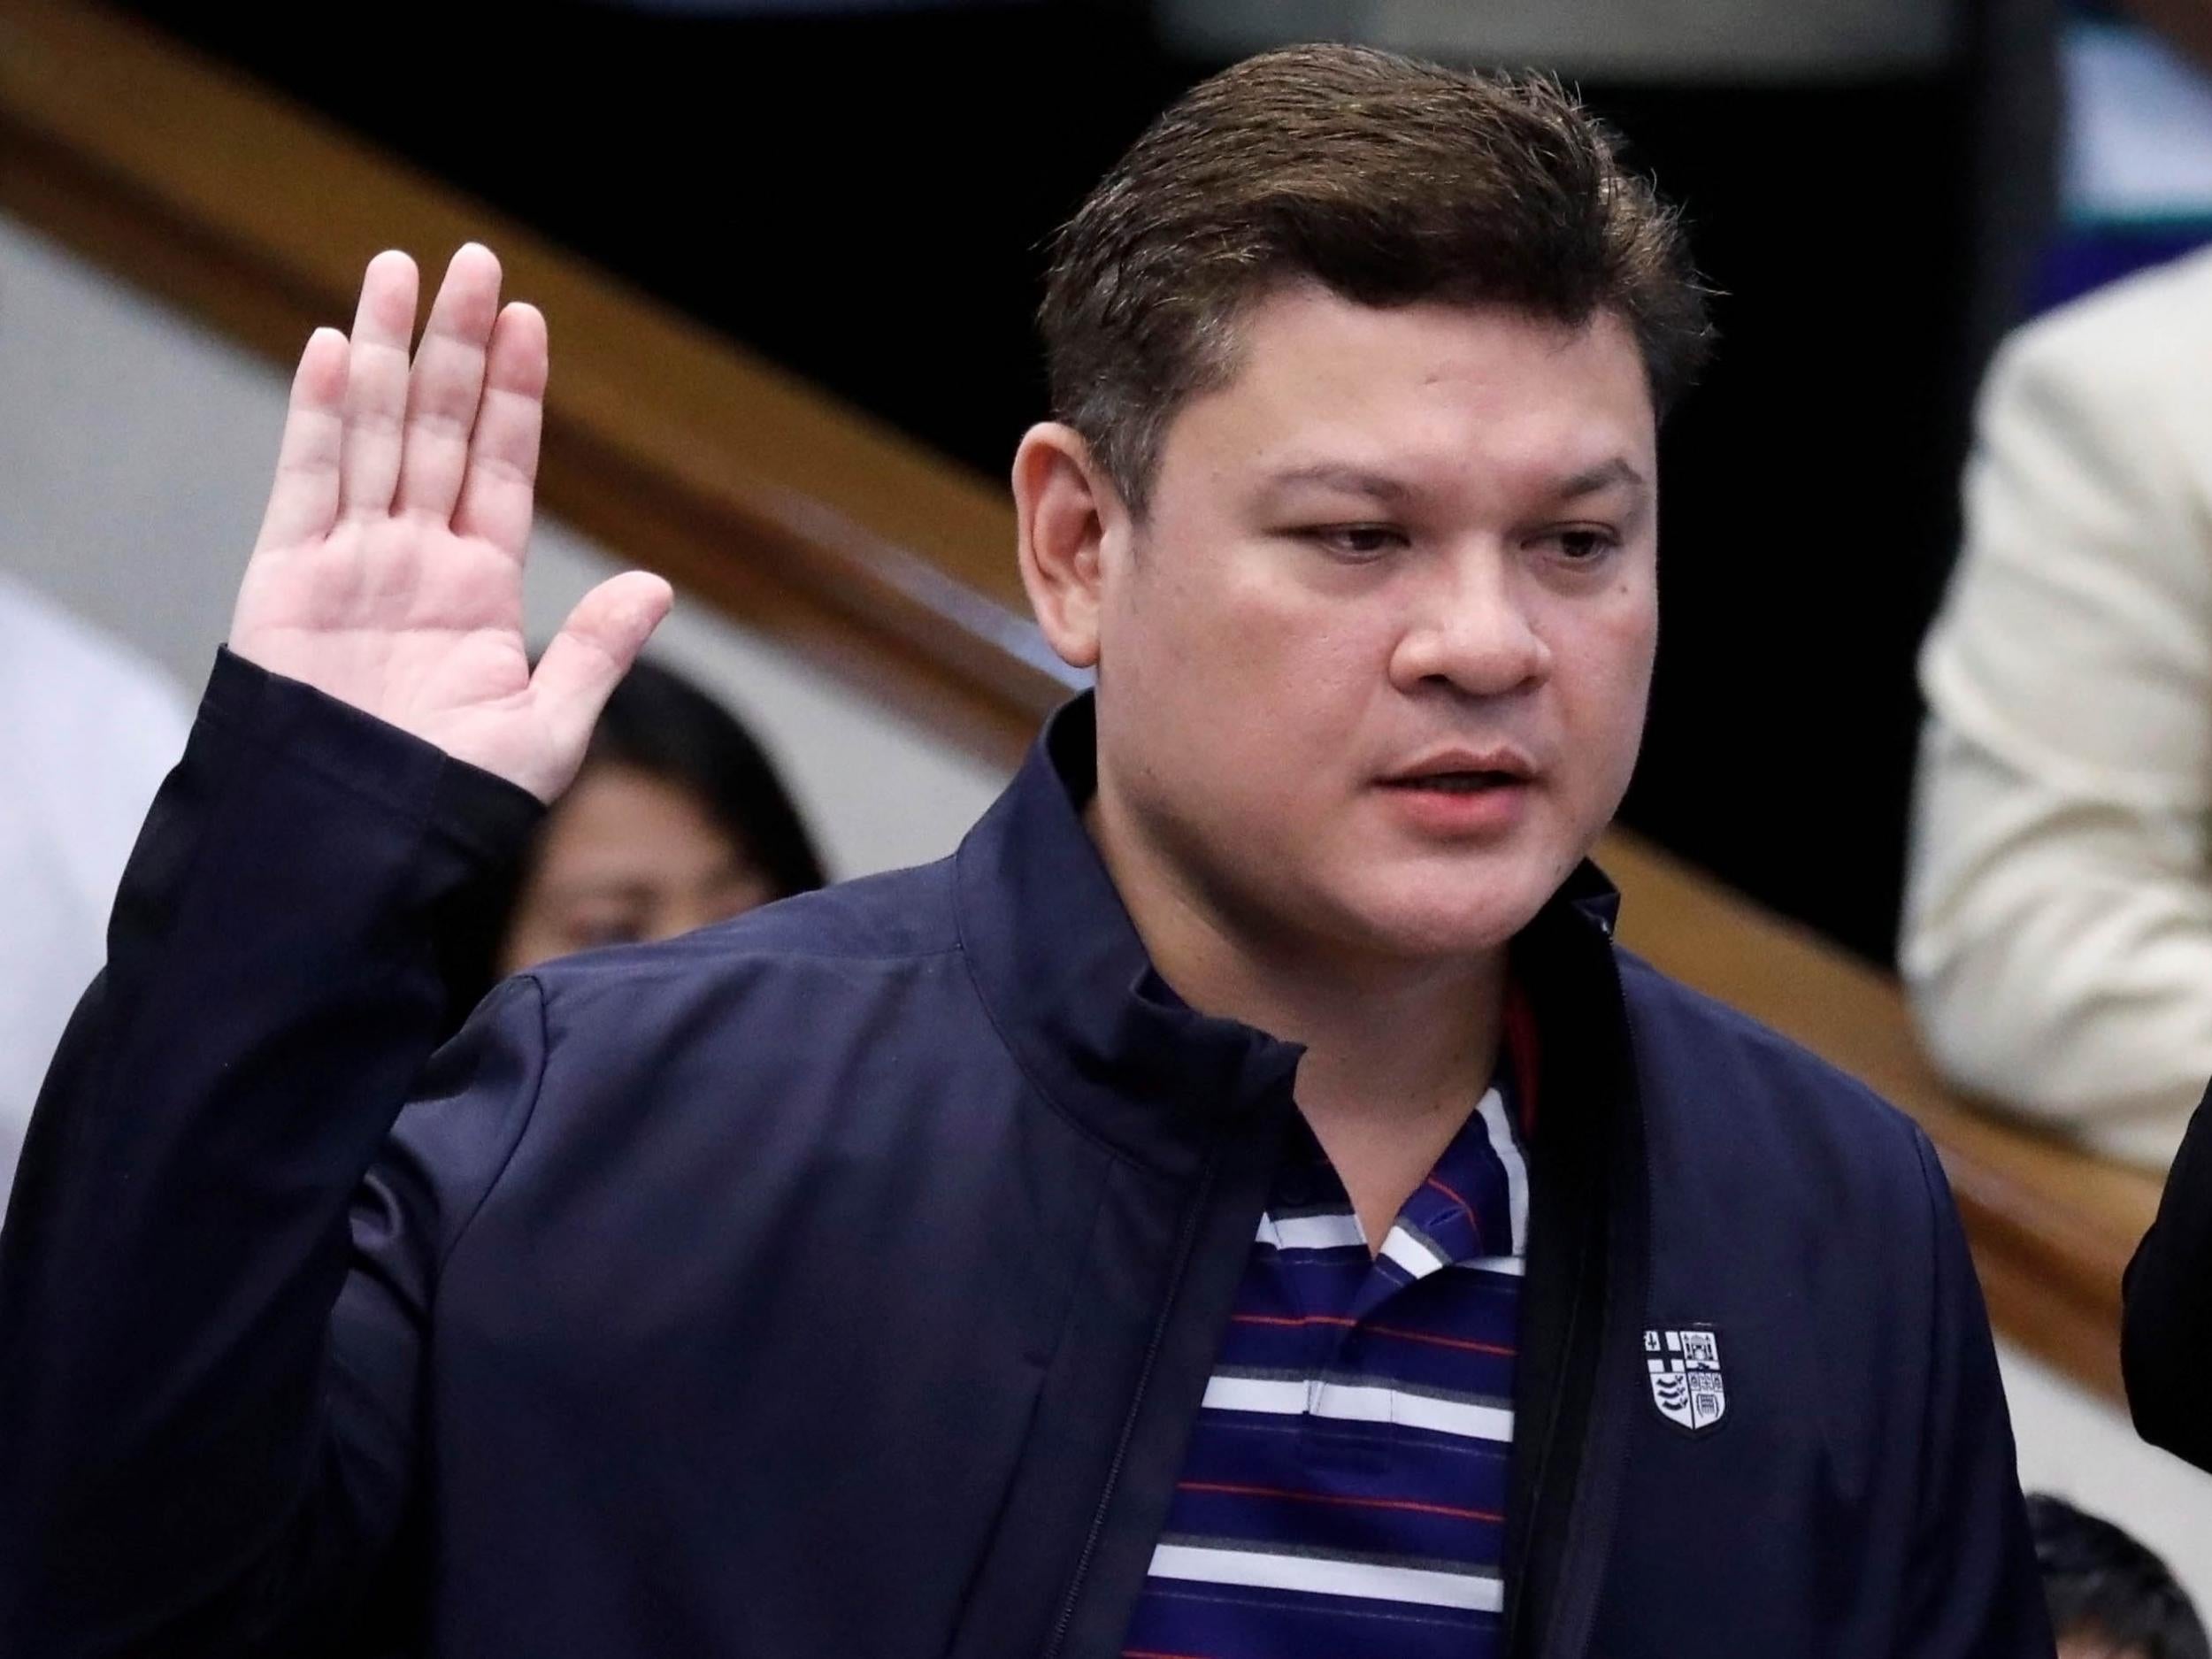 Davao's Vice Mayor Paolo Duterte and son of President Rodrigo Duterte takes an oath as he testifies at a Senate hearing on drug smuggling in Pasay, Metro Manila